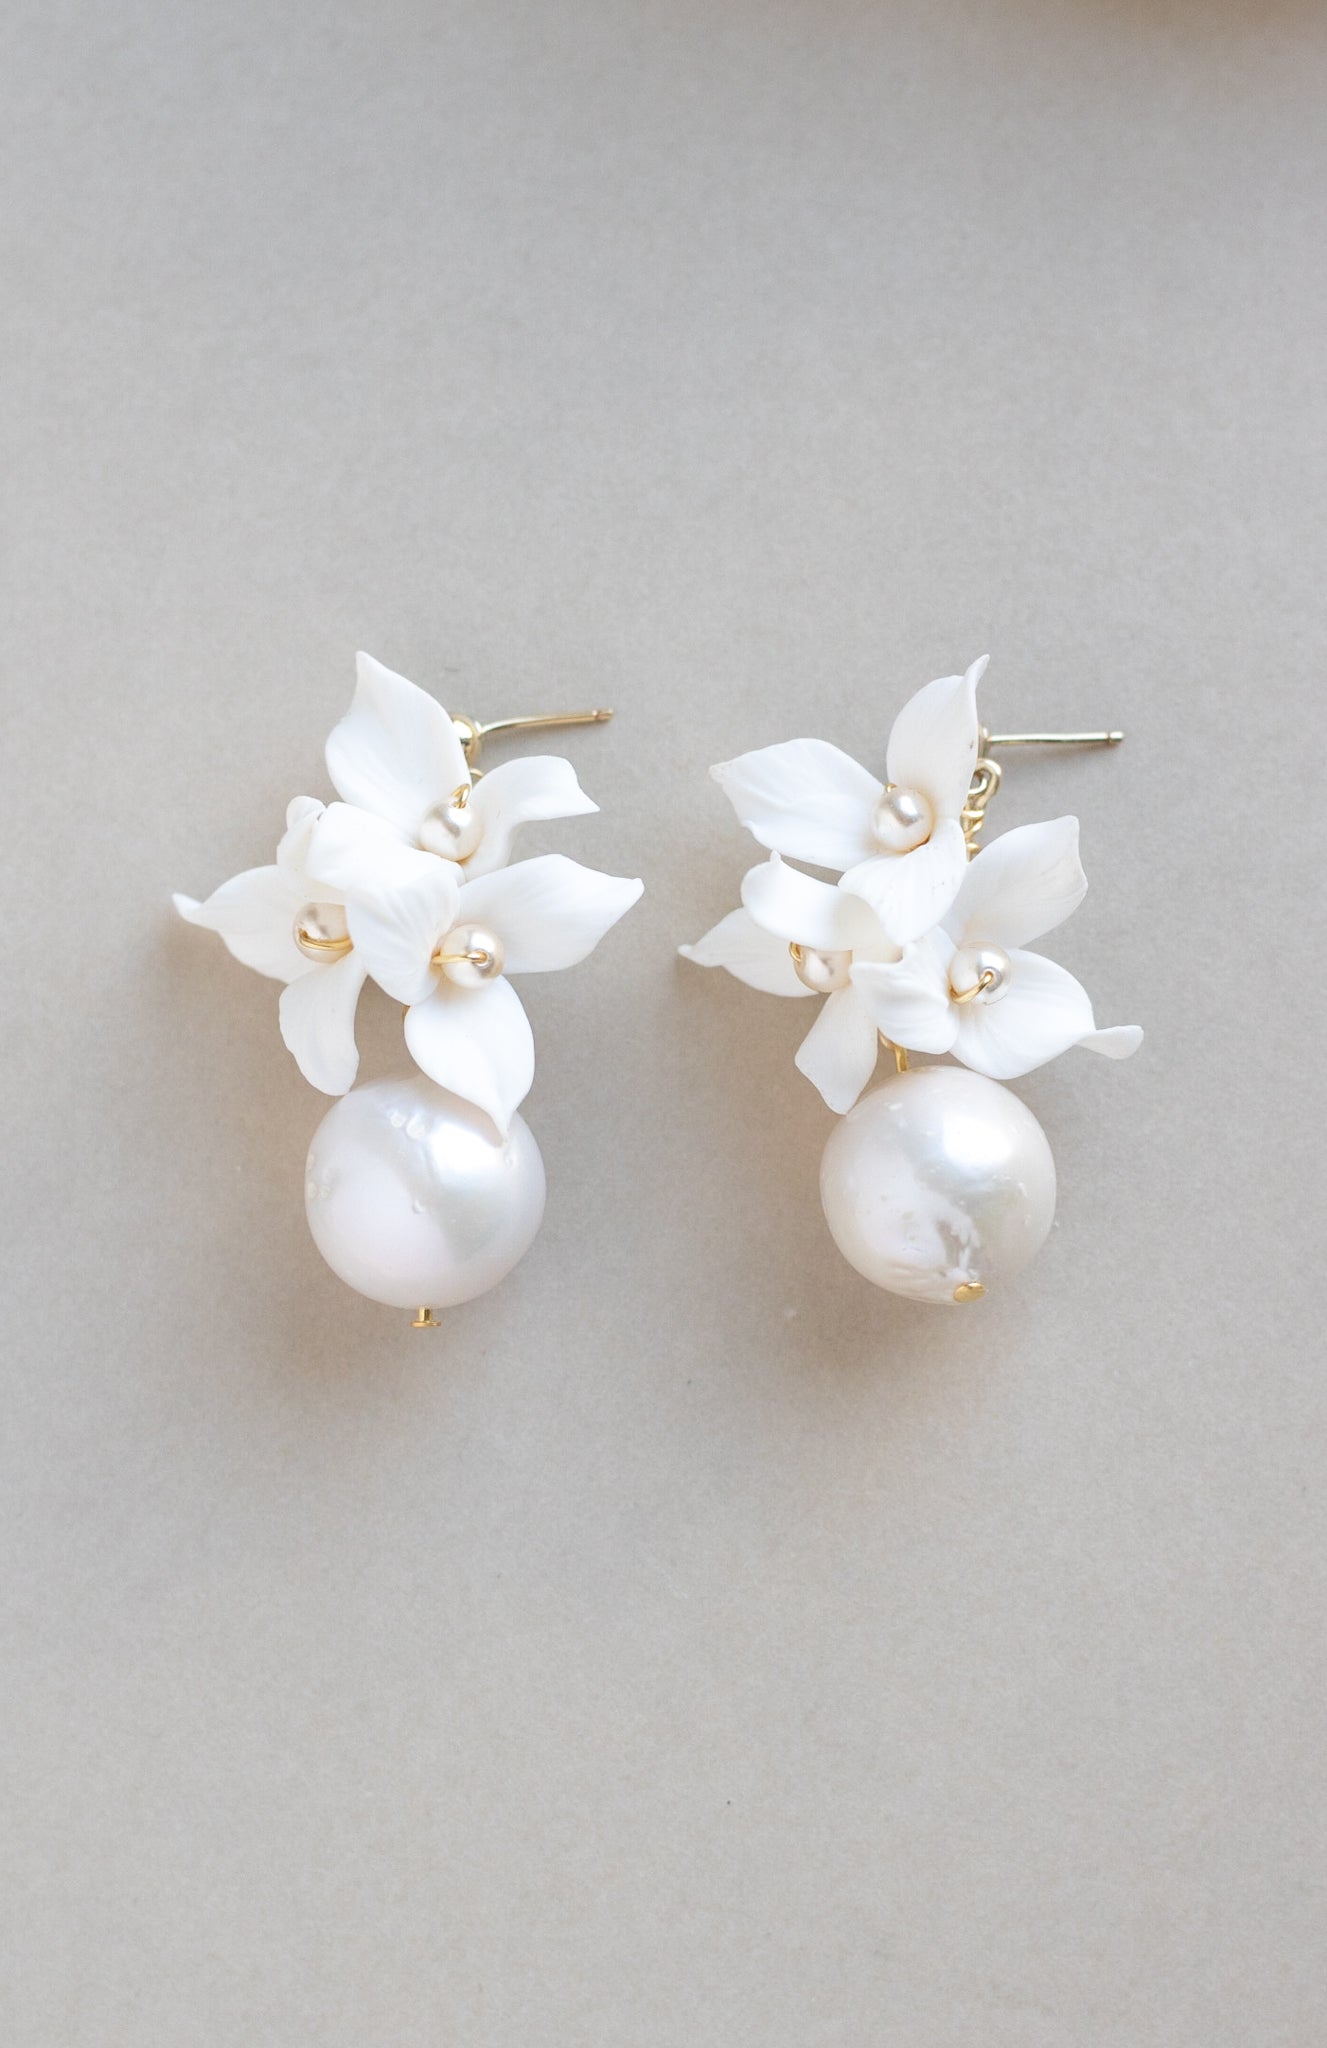 2 carat Pear Shape Diamond Sterling Silver Earrings, Wedding Day Jewellery  by Margalit Rings – MargalitRings